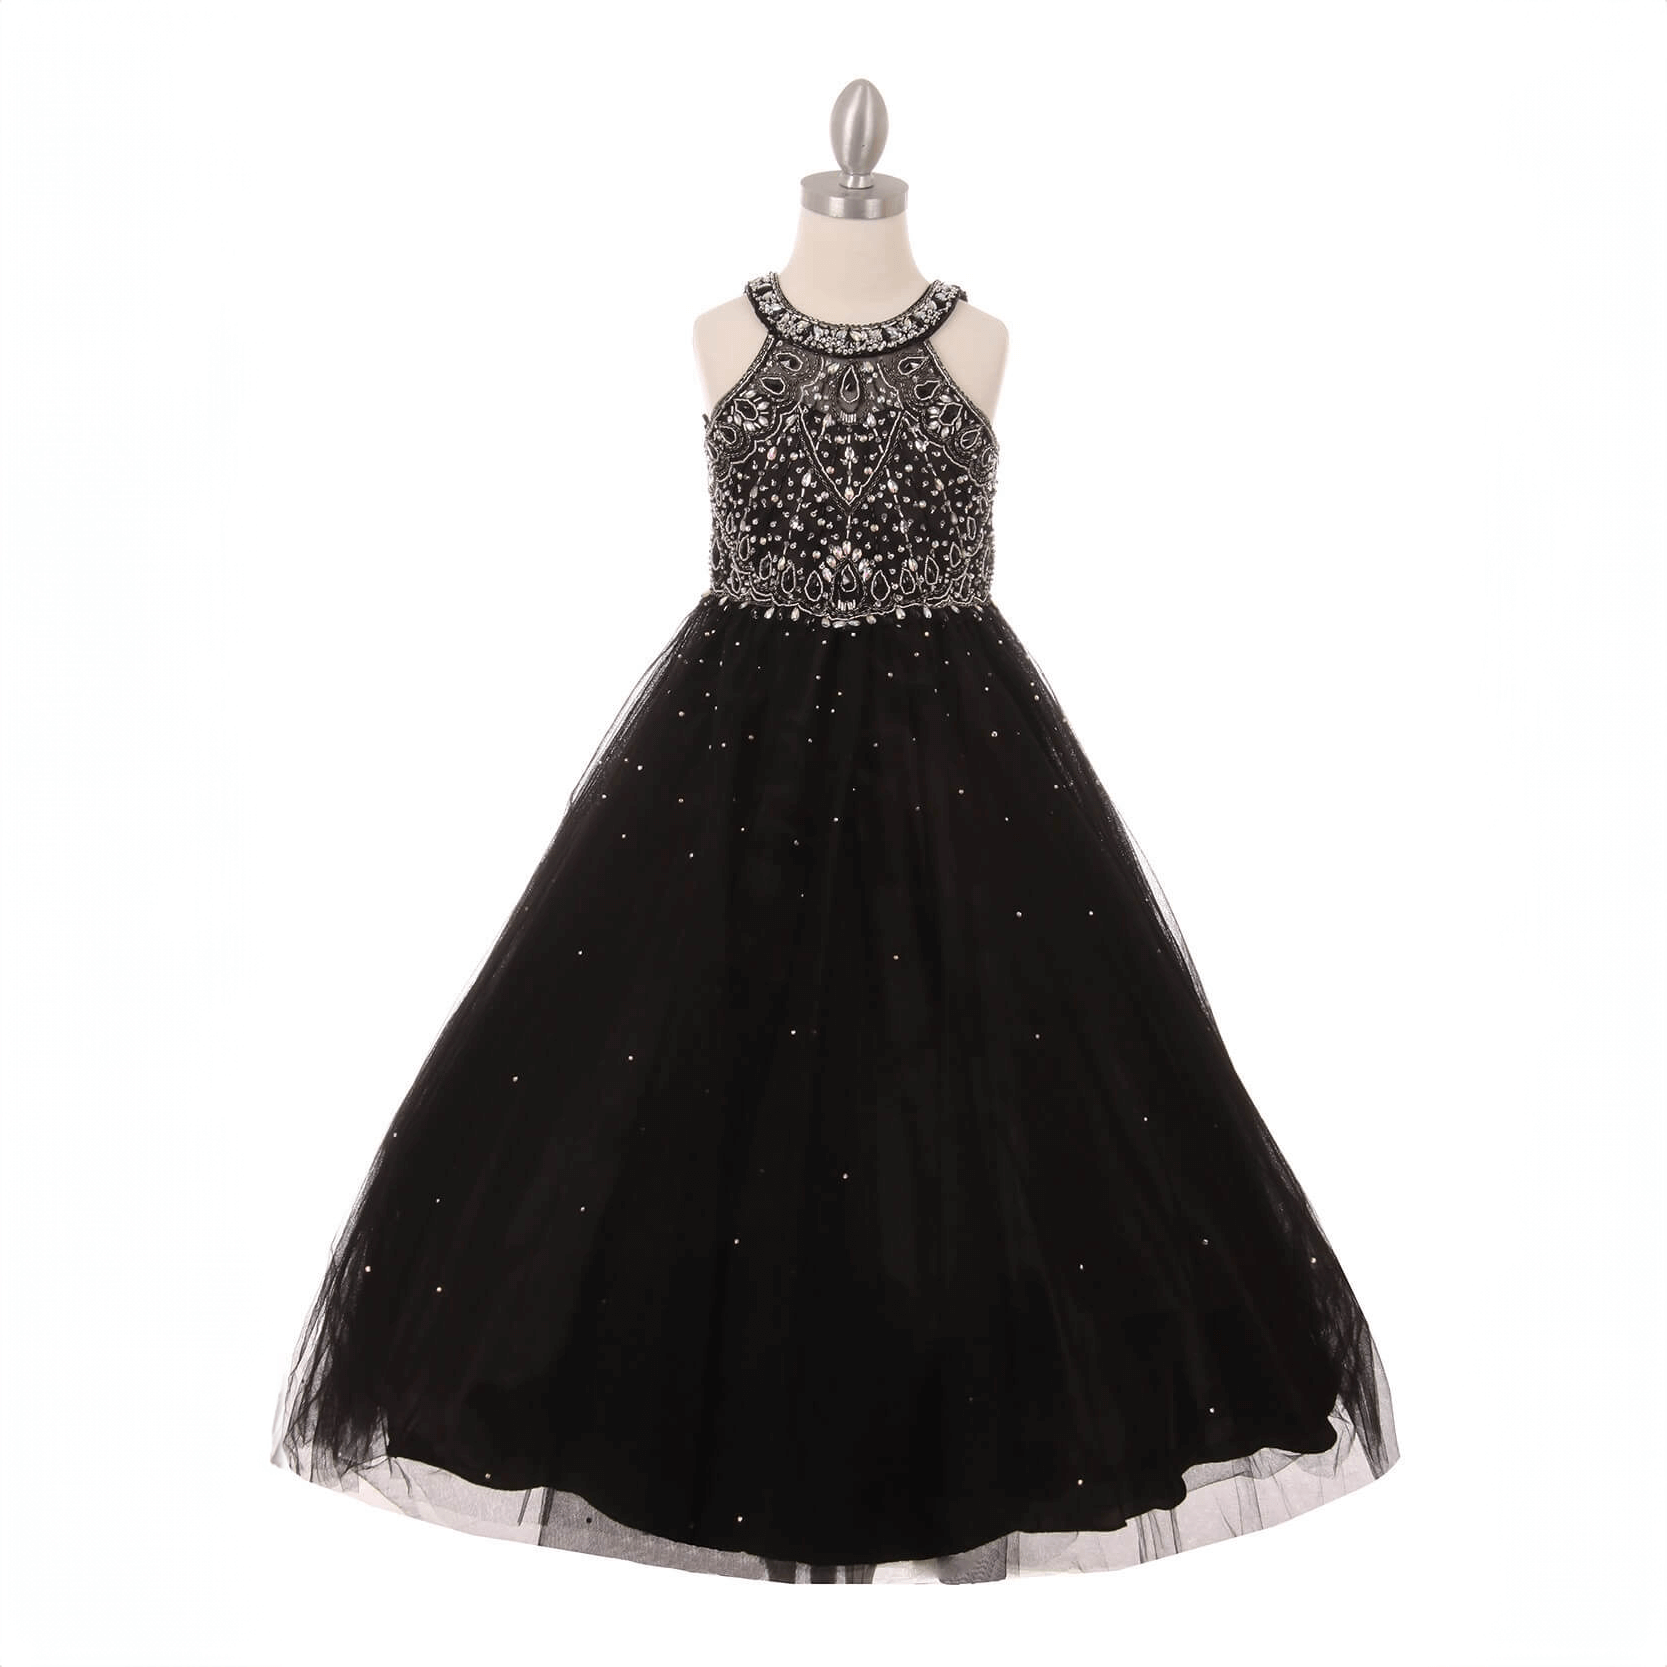 black coloured full length princess-style dress